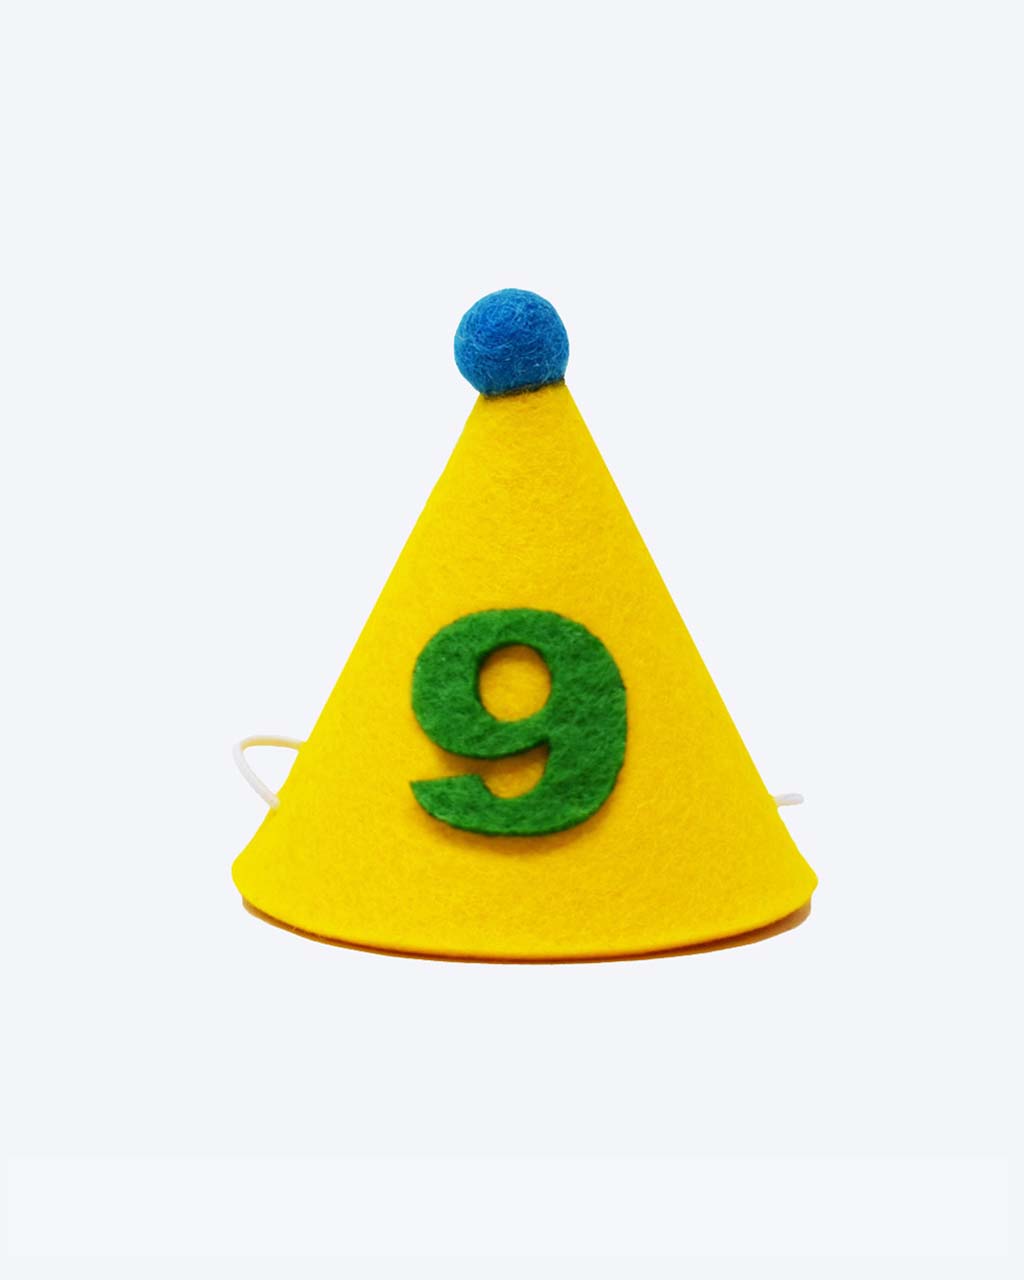 PAWTY HAT - Green number by MODERNBEAST